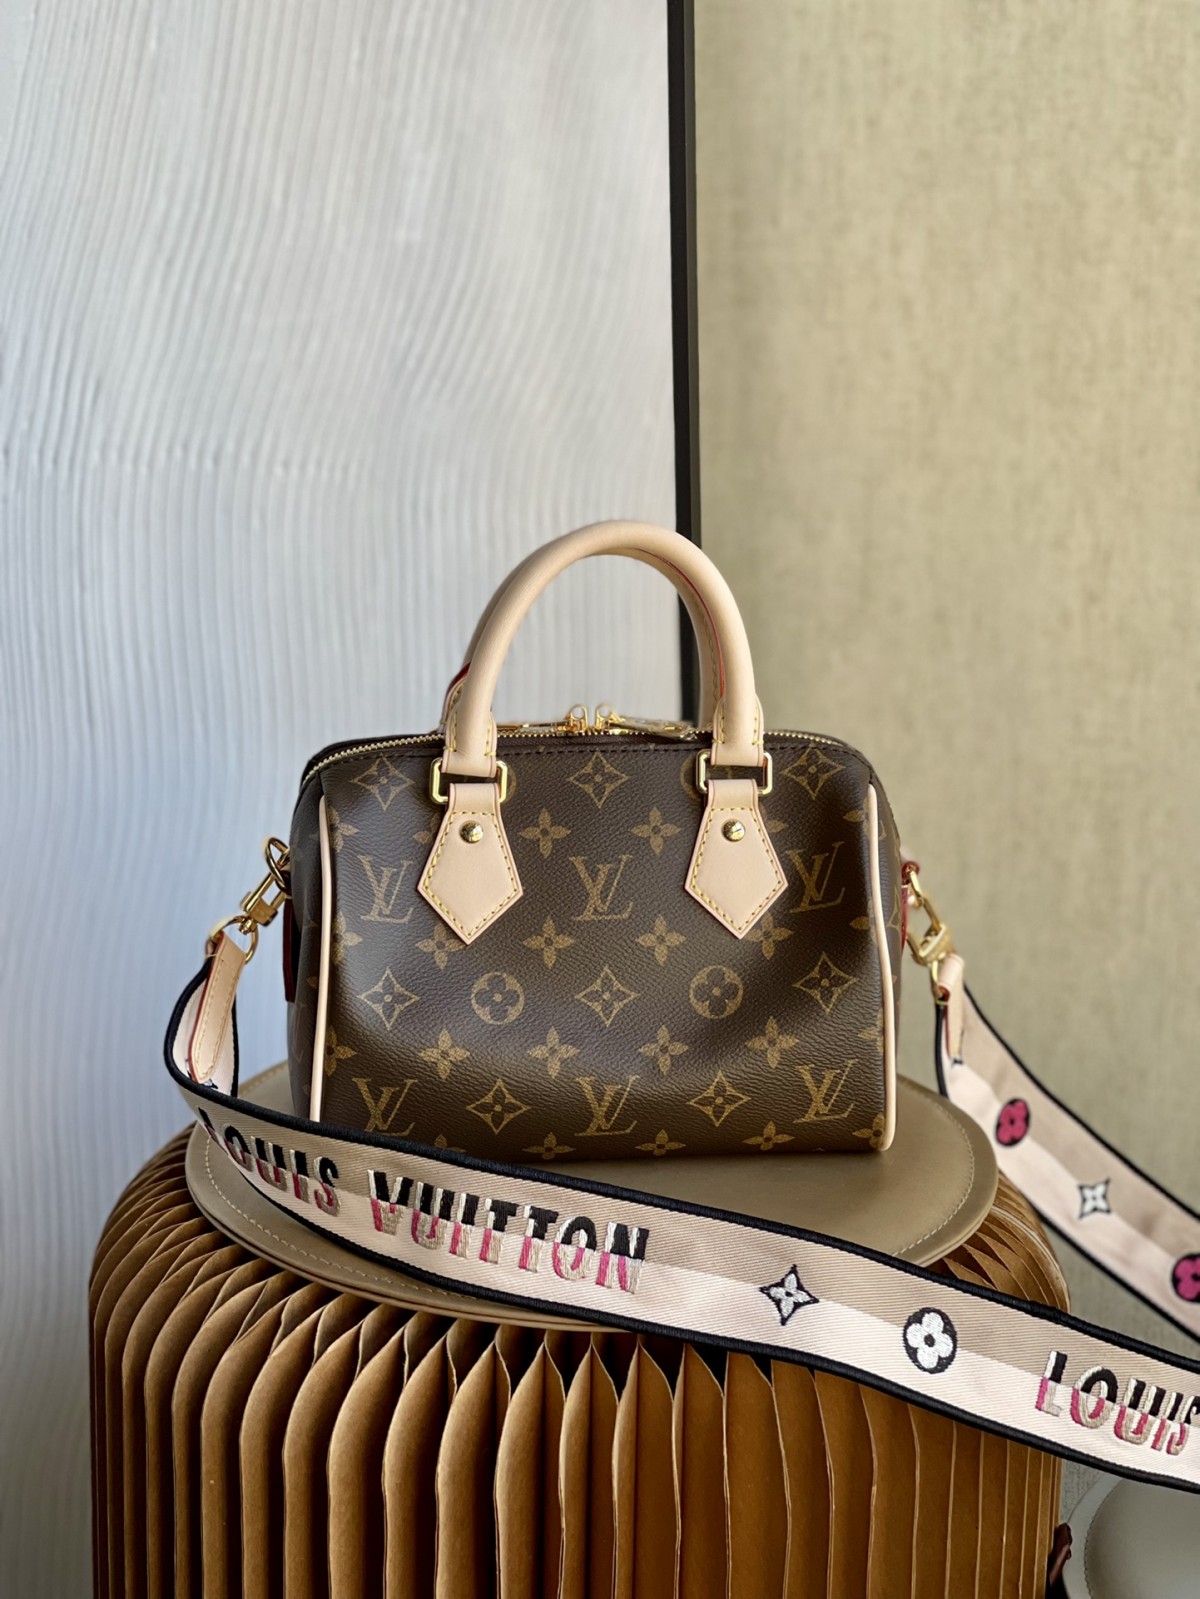 Video: Shebag best seller of Louis Vuitton bags in 2023 (2023 Week 50)-အရည်အသွေးအကောင်းဆုံးအတု Louis Vuitton Bag အွန်လိုင်းစတိုး၊ ပုံစံတူဒီဇိုင်နာအိတ် ru